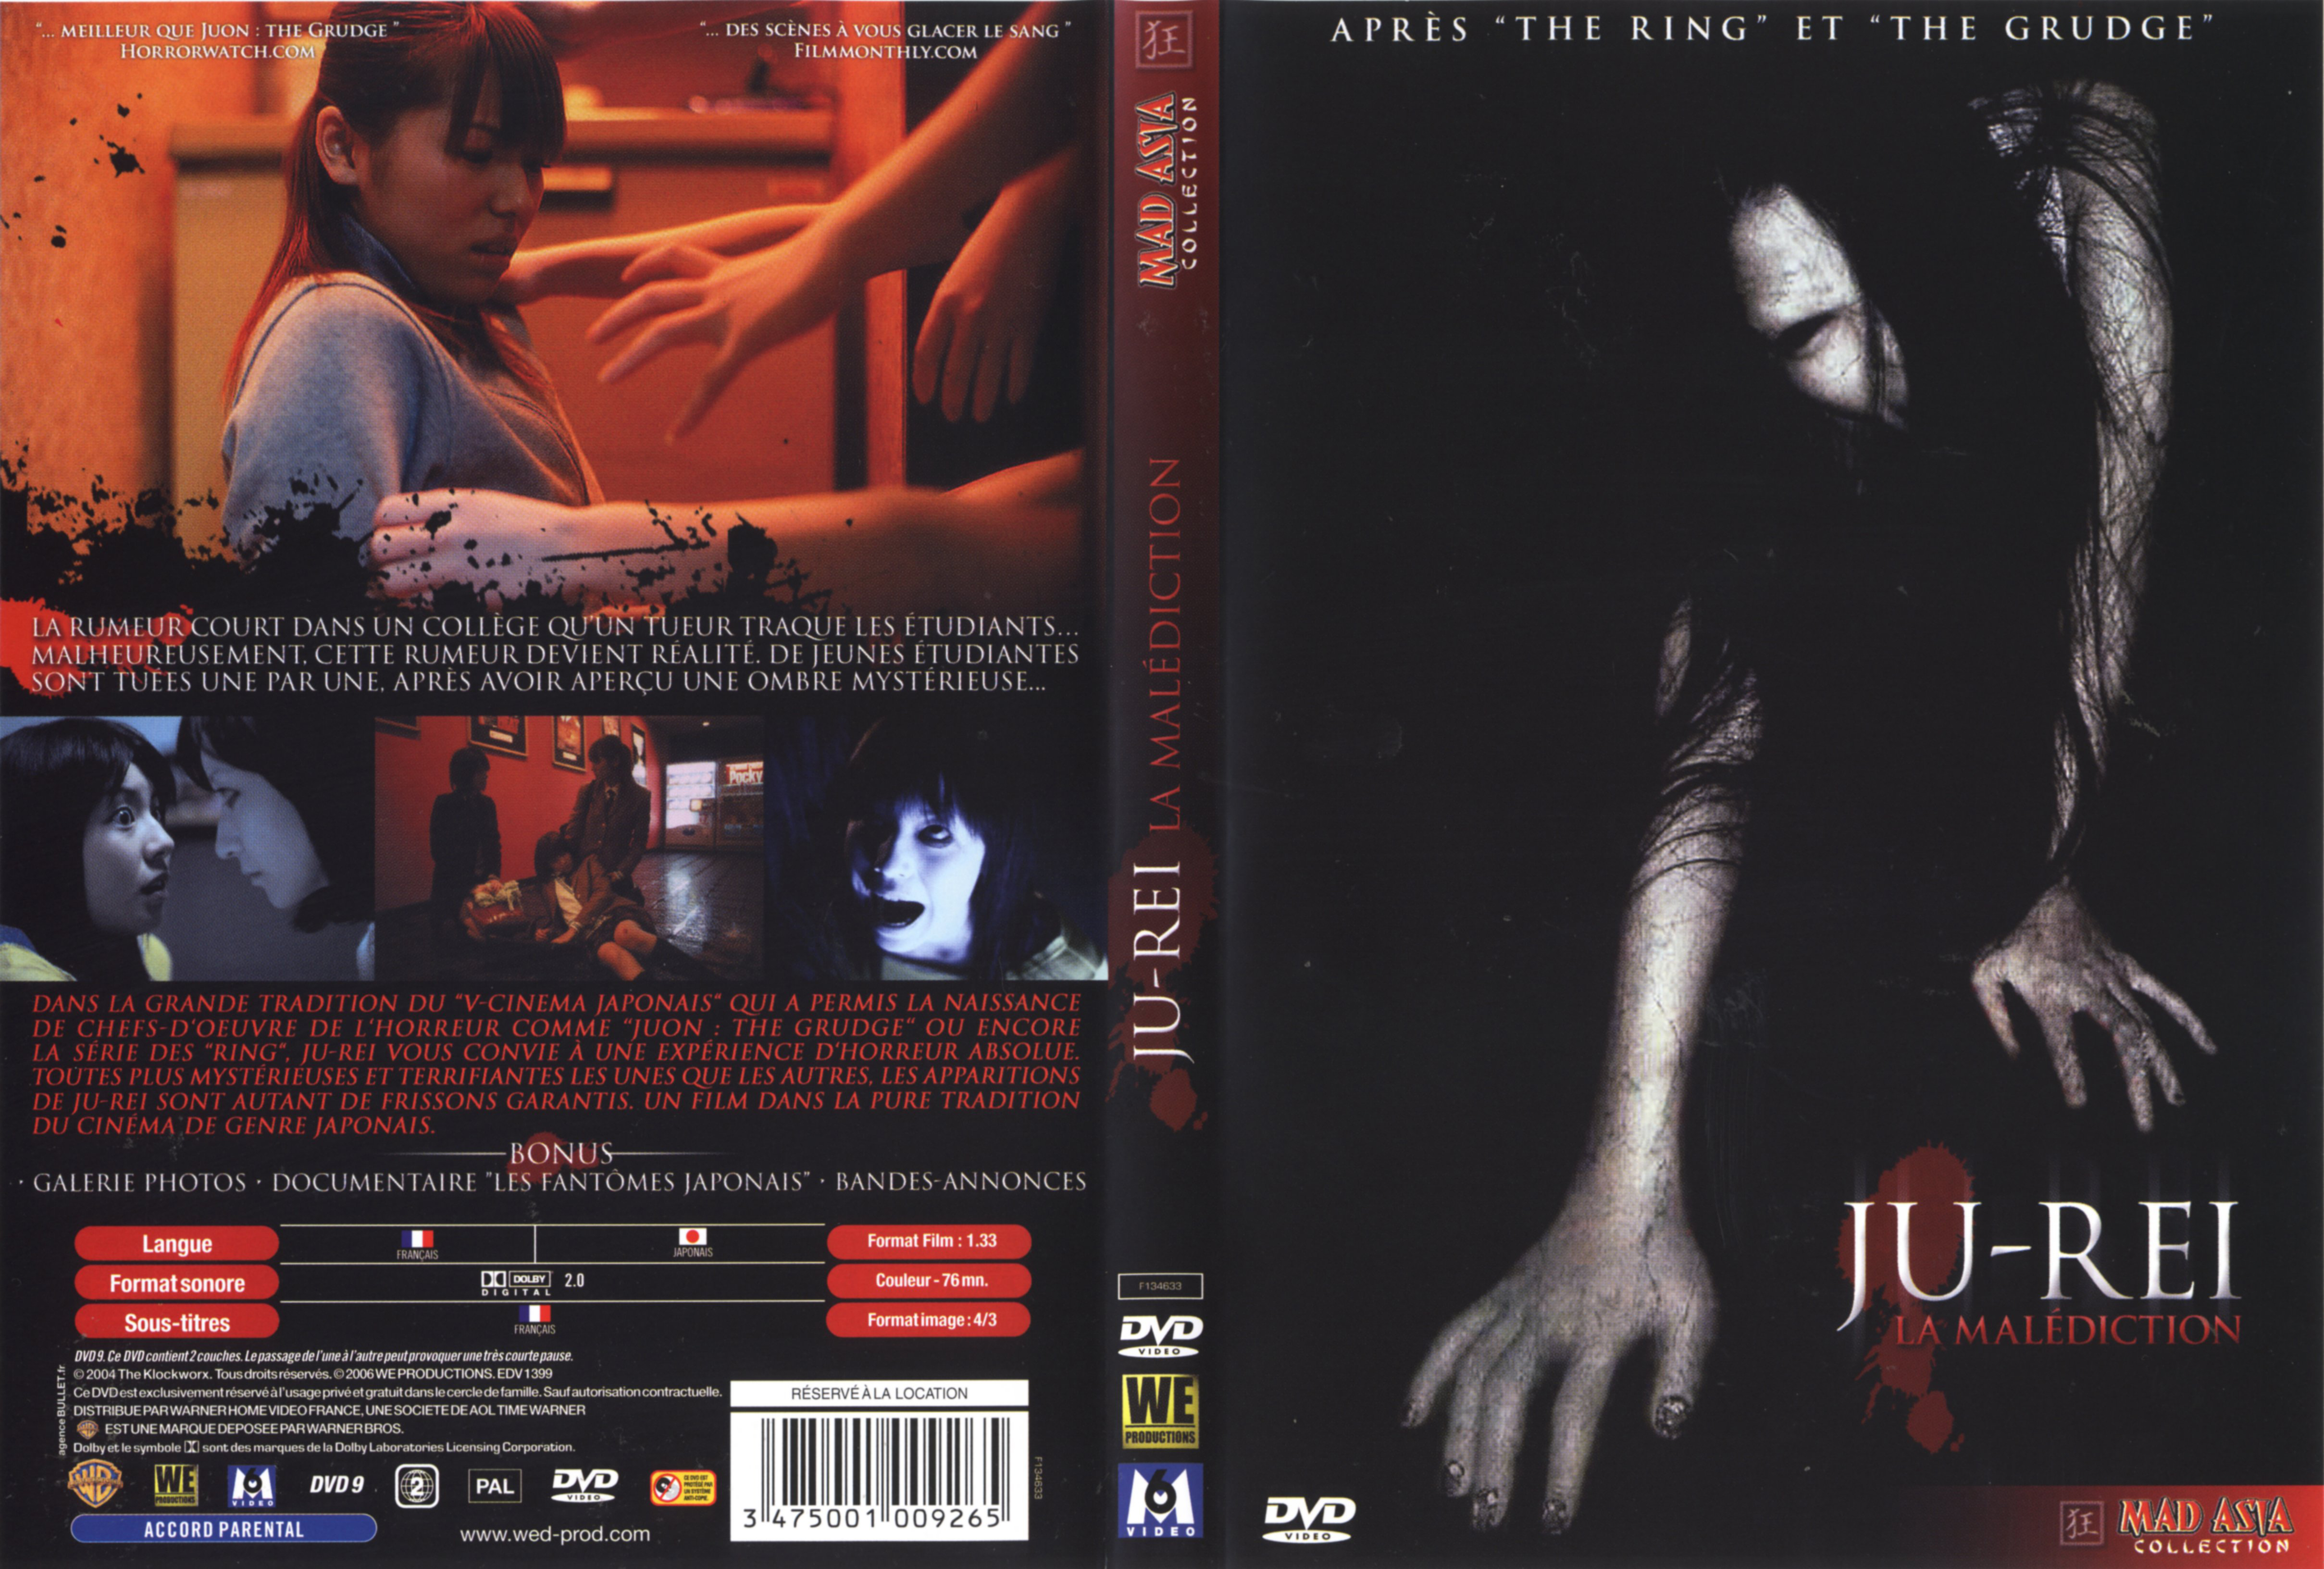 Jaquette DVD Ju-Rei la maldiction